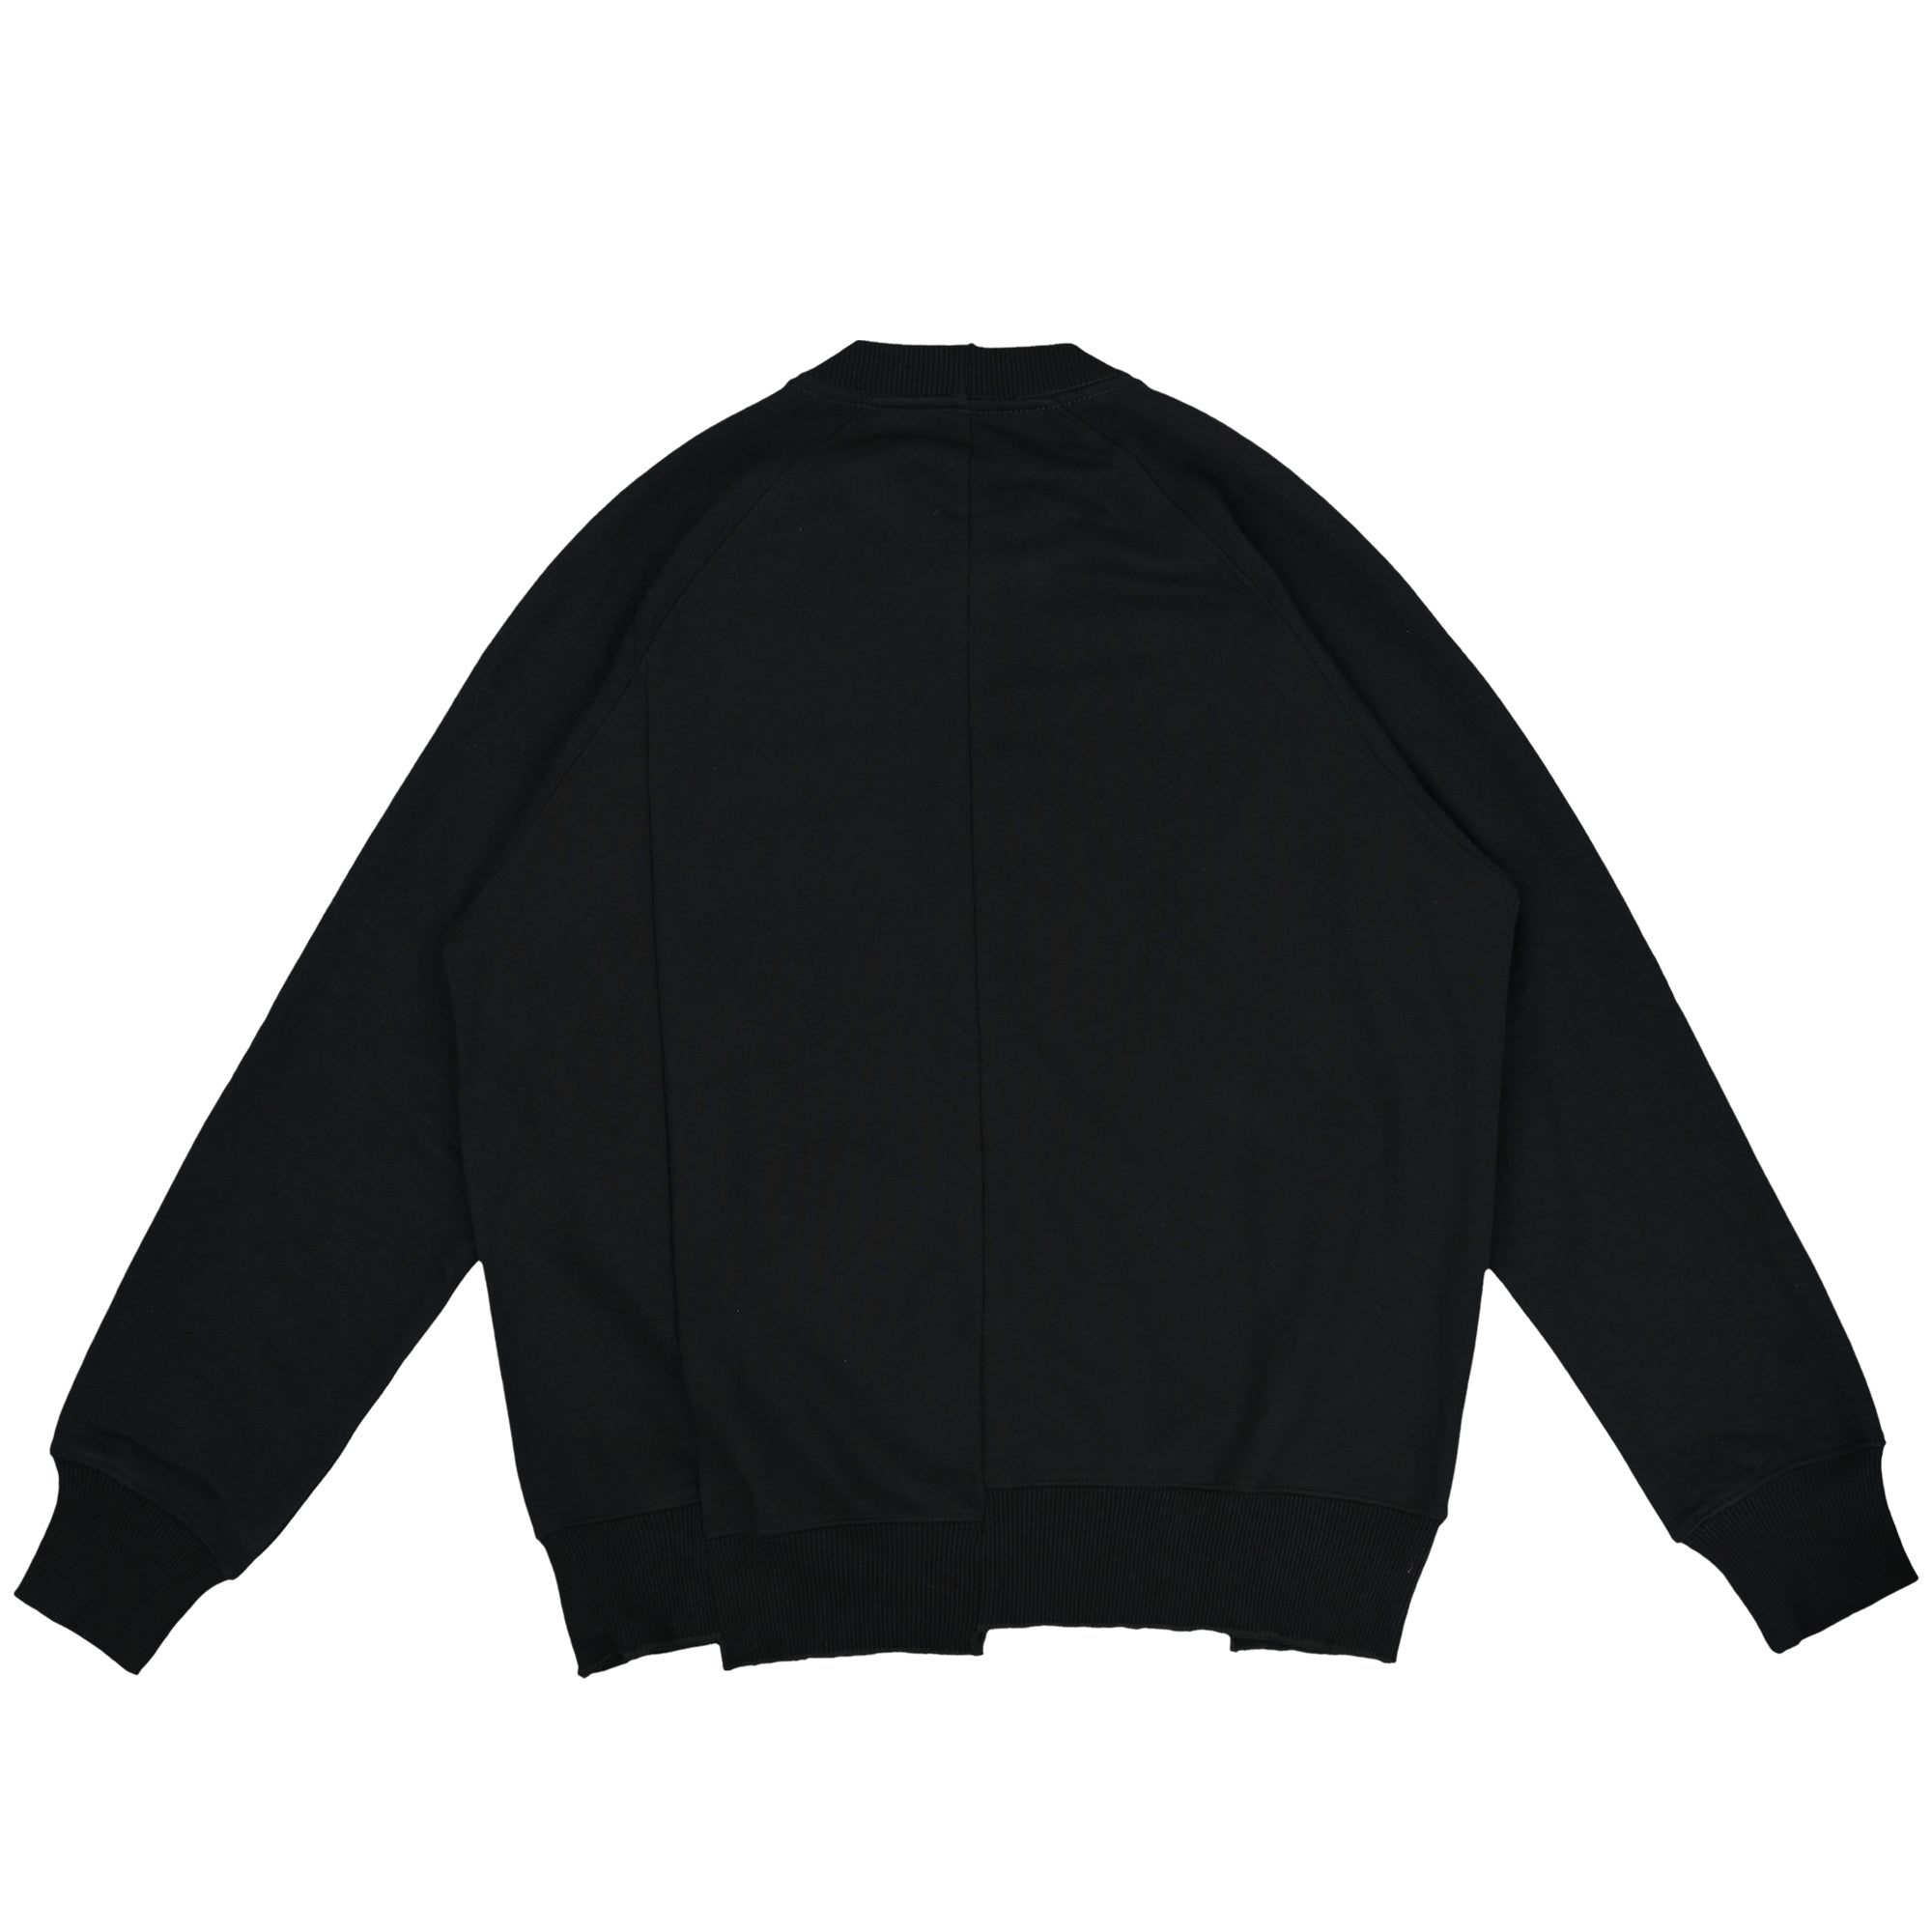 The Salvages 'Sublime' Reconstructed Raglan Sweatshirt in Black